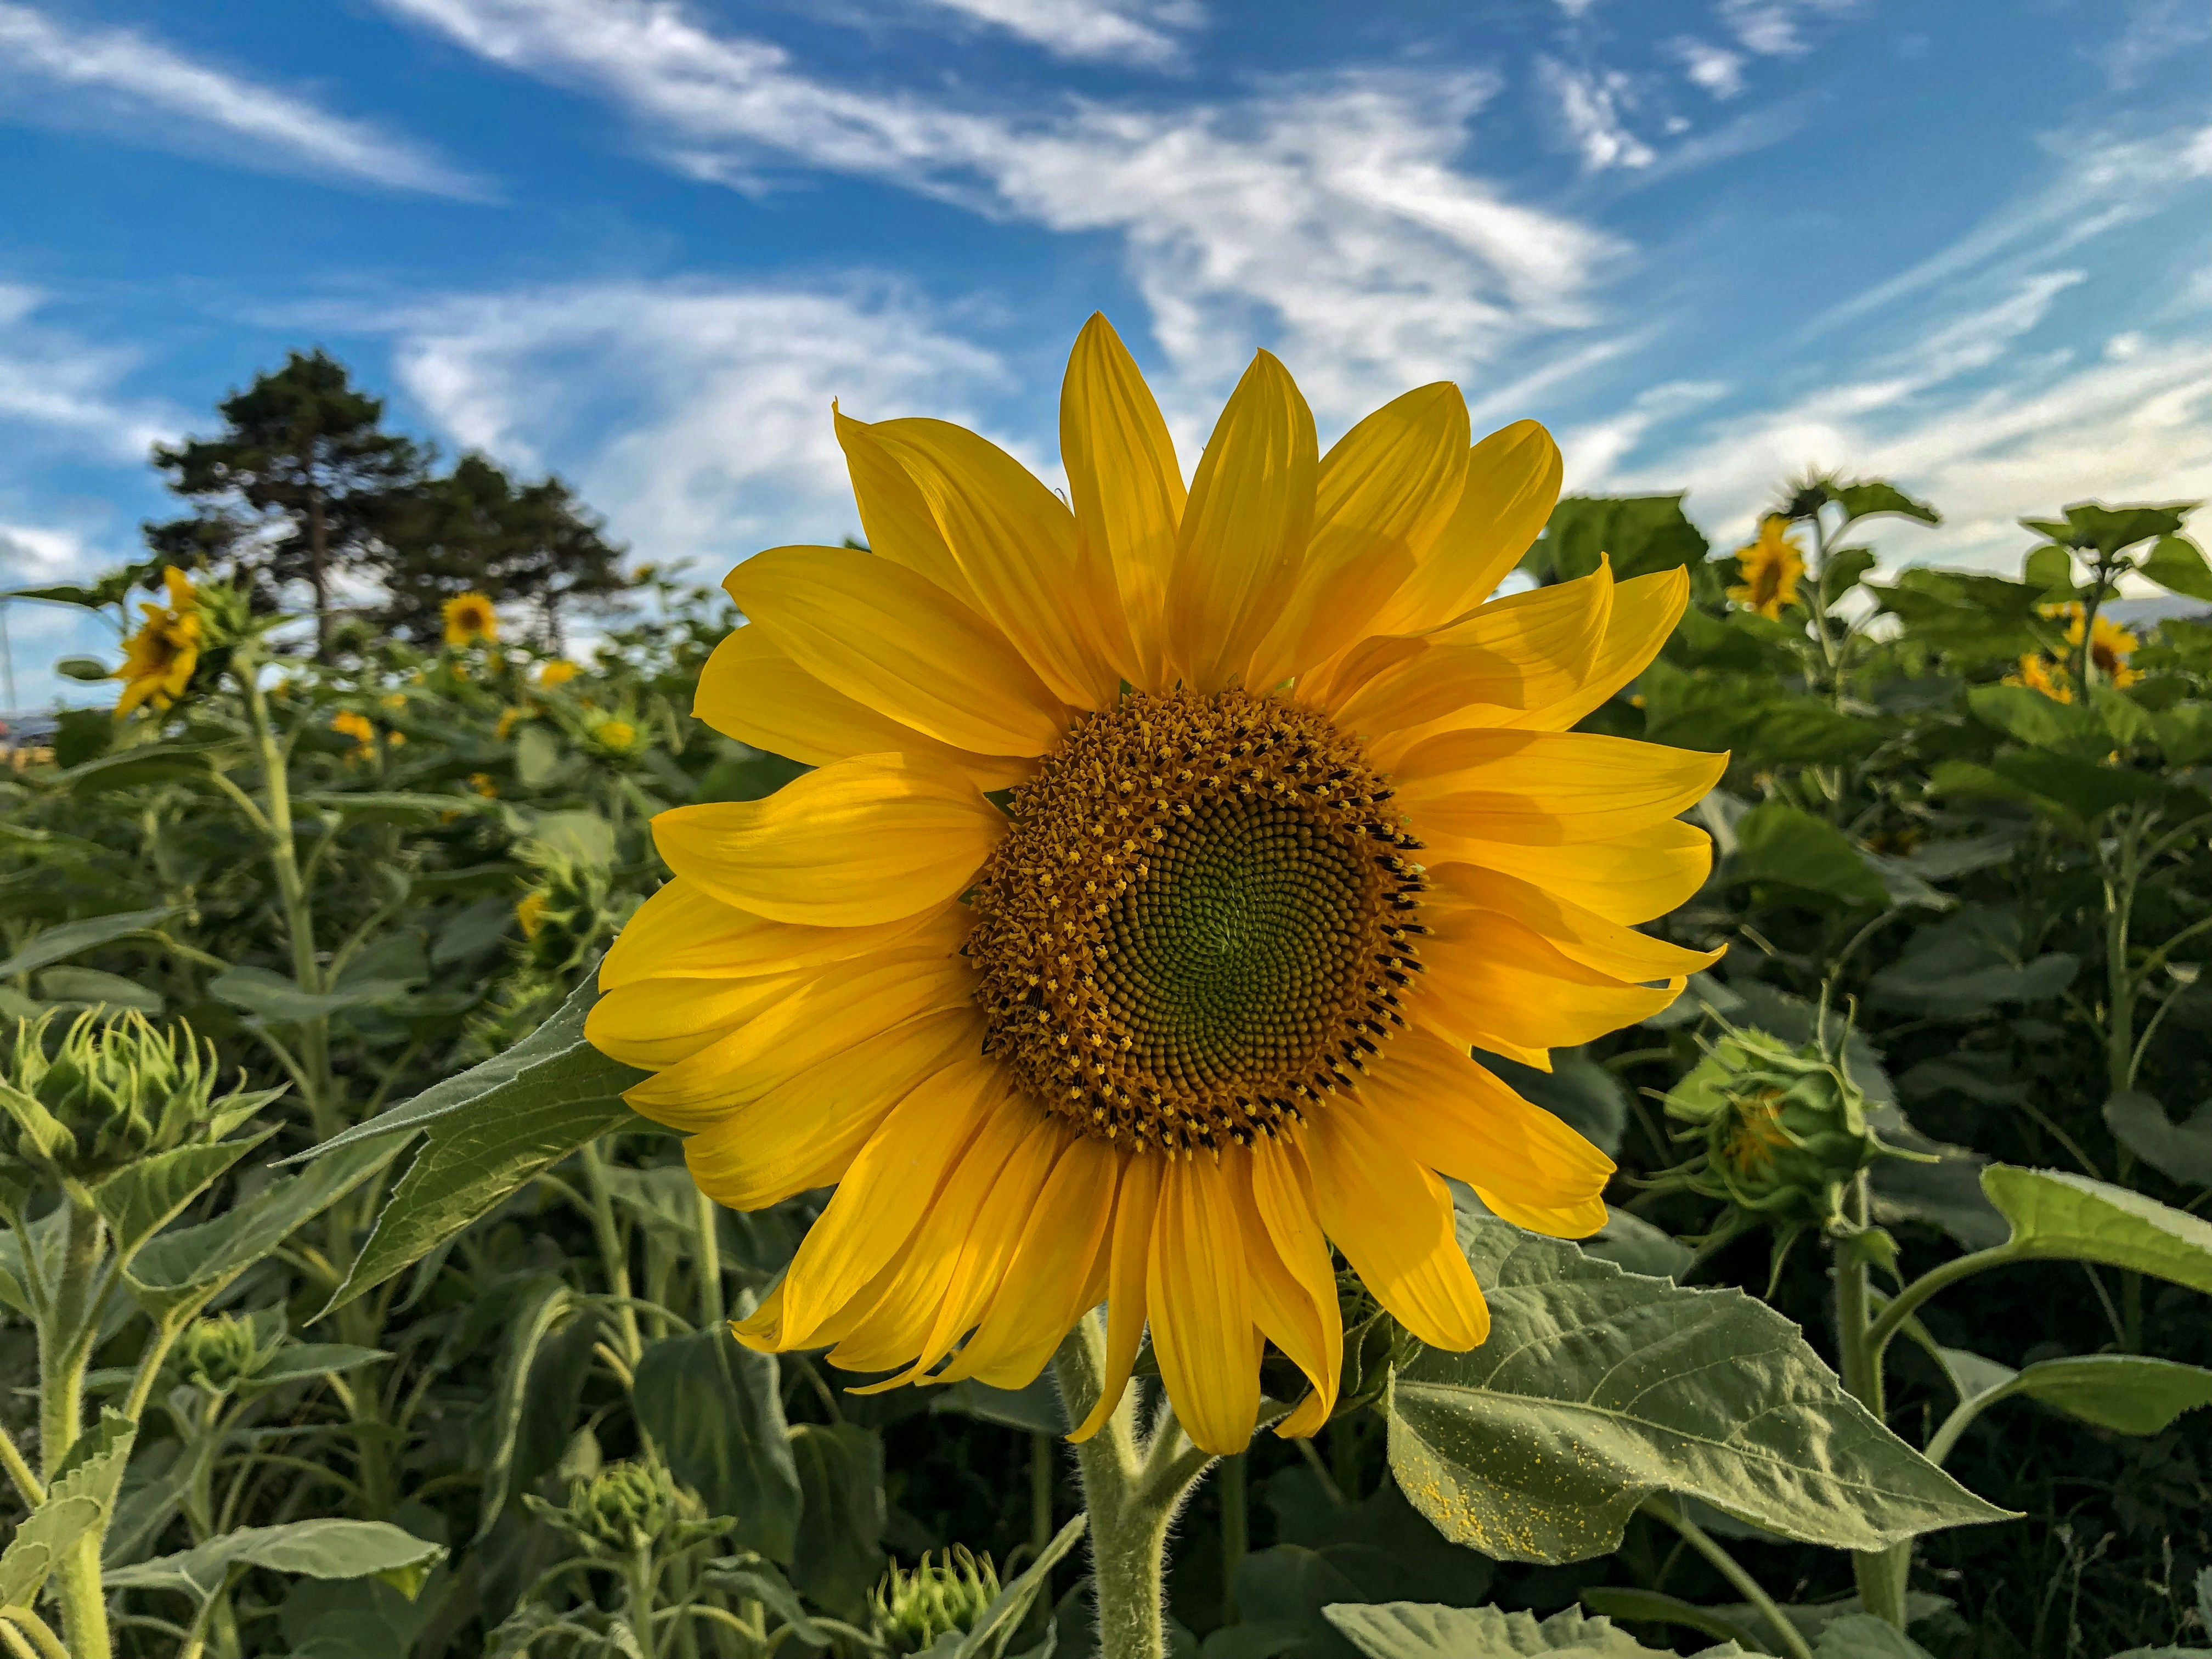 Sunny day sunflower in Bilbao, Spain